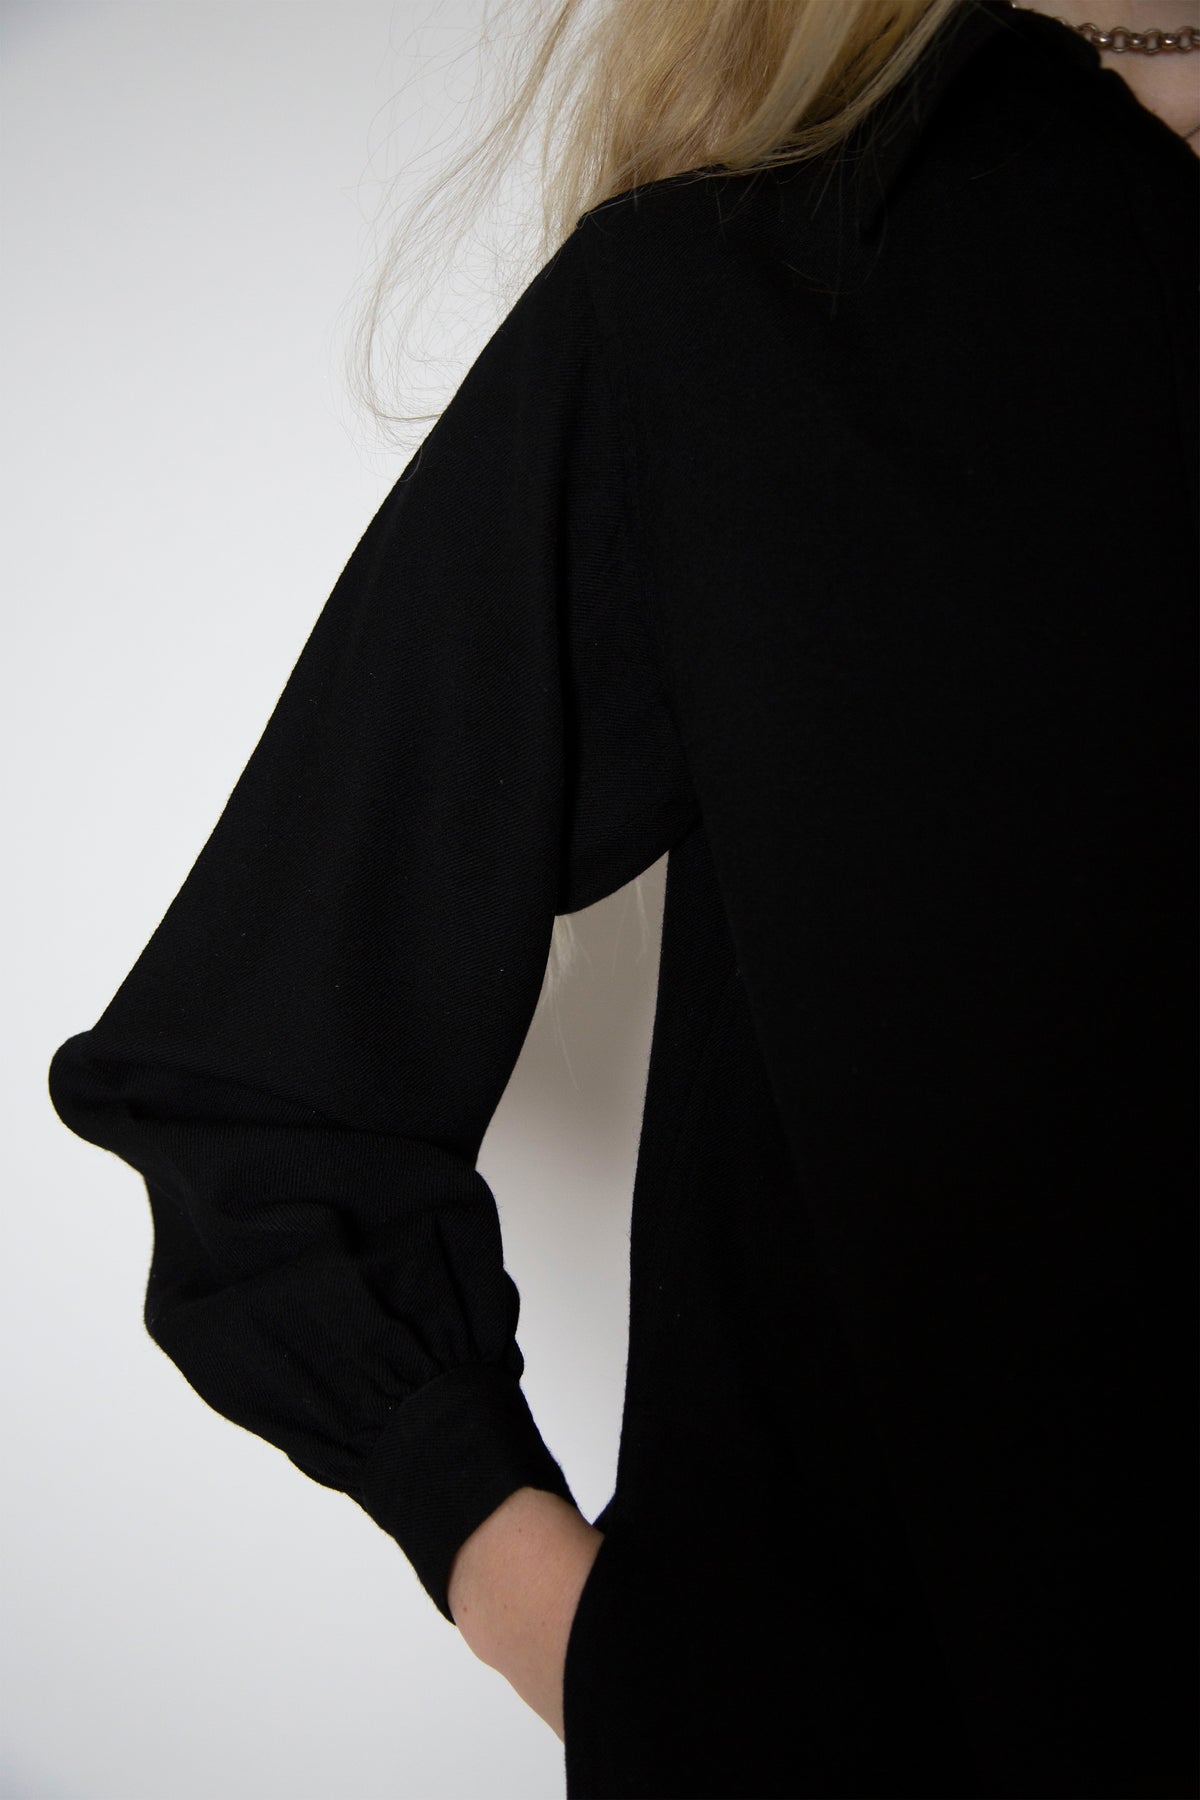 Yves Saint Laurent wool shirt